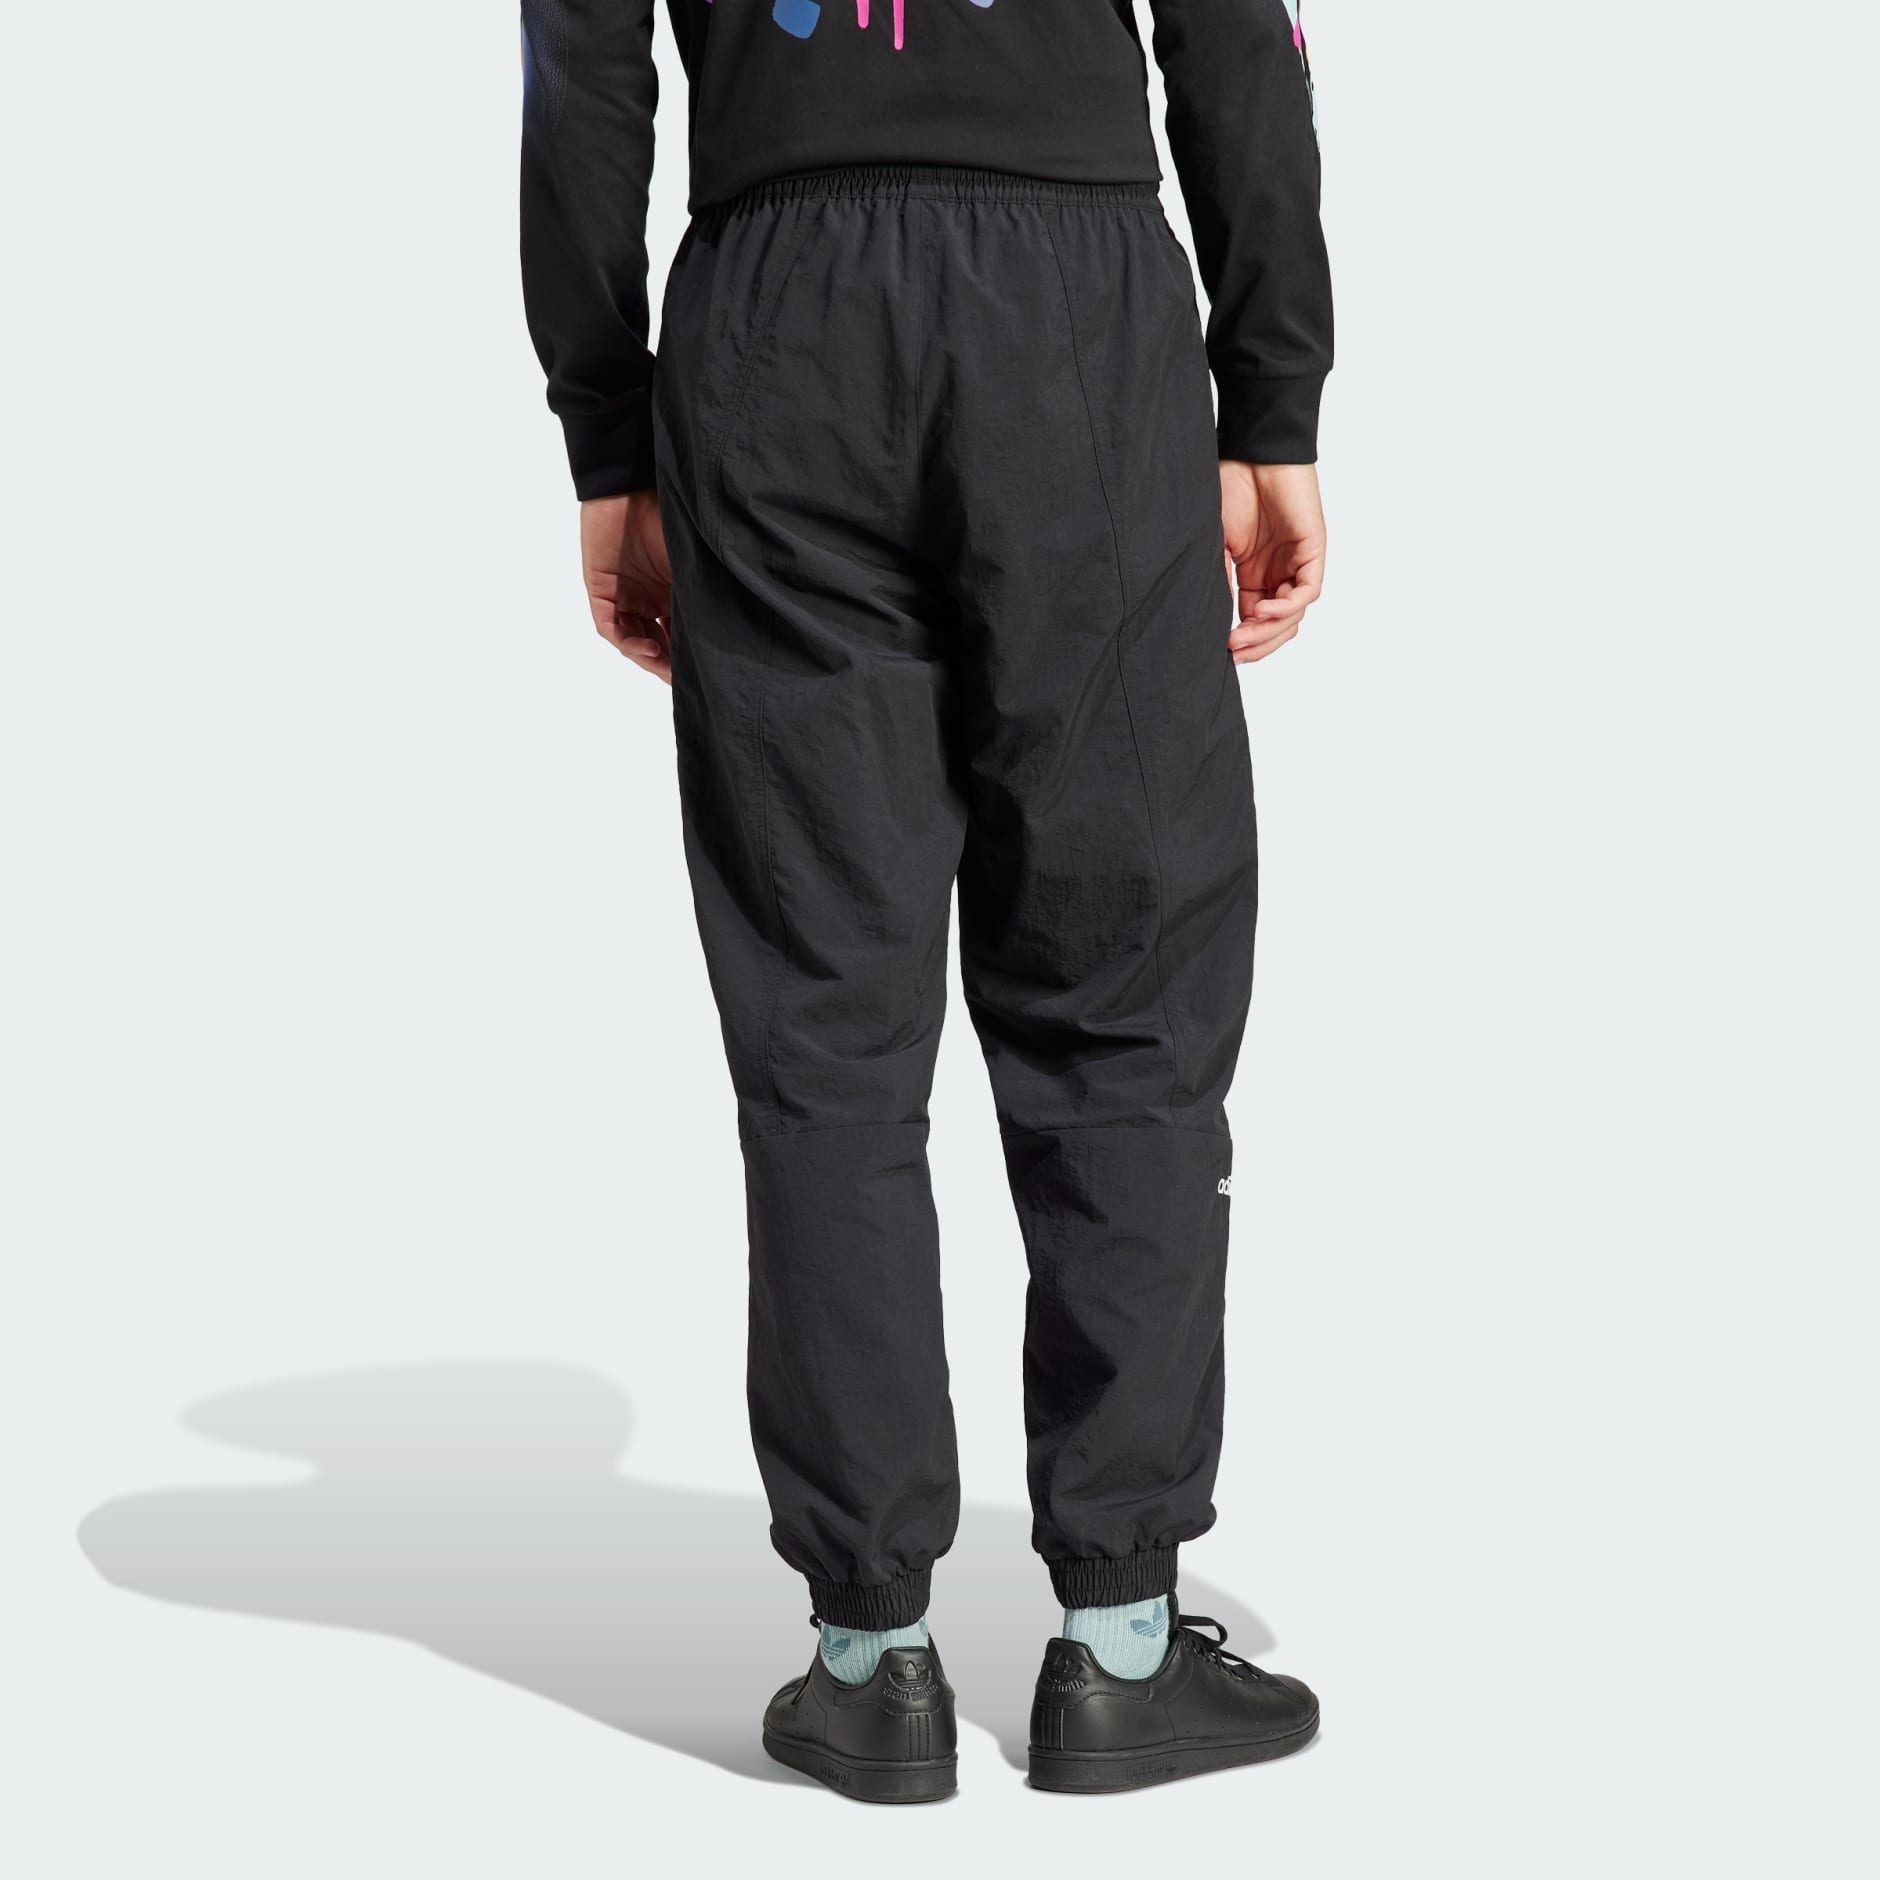 NEW Adidas Originals Womens Adicolor Rainbow Stripe Track Pants